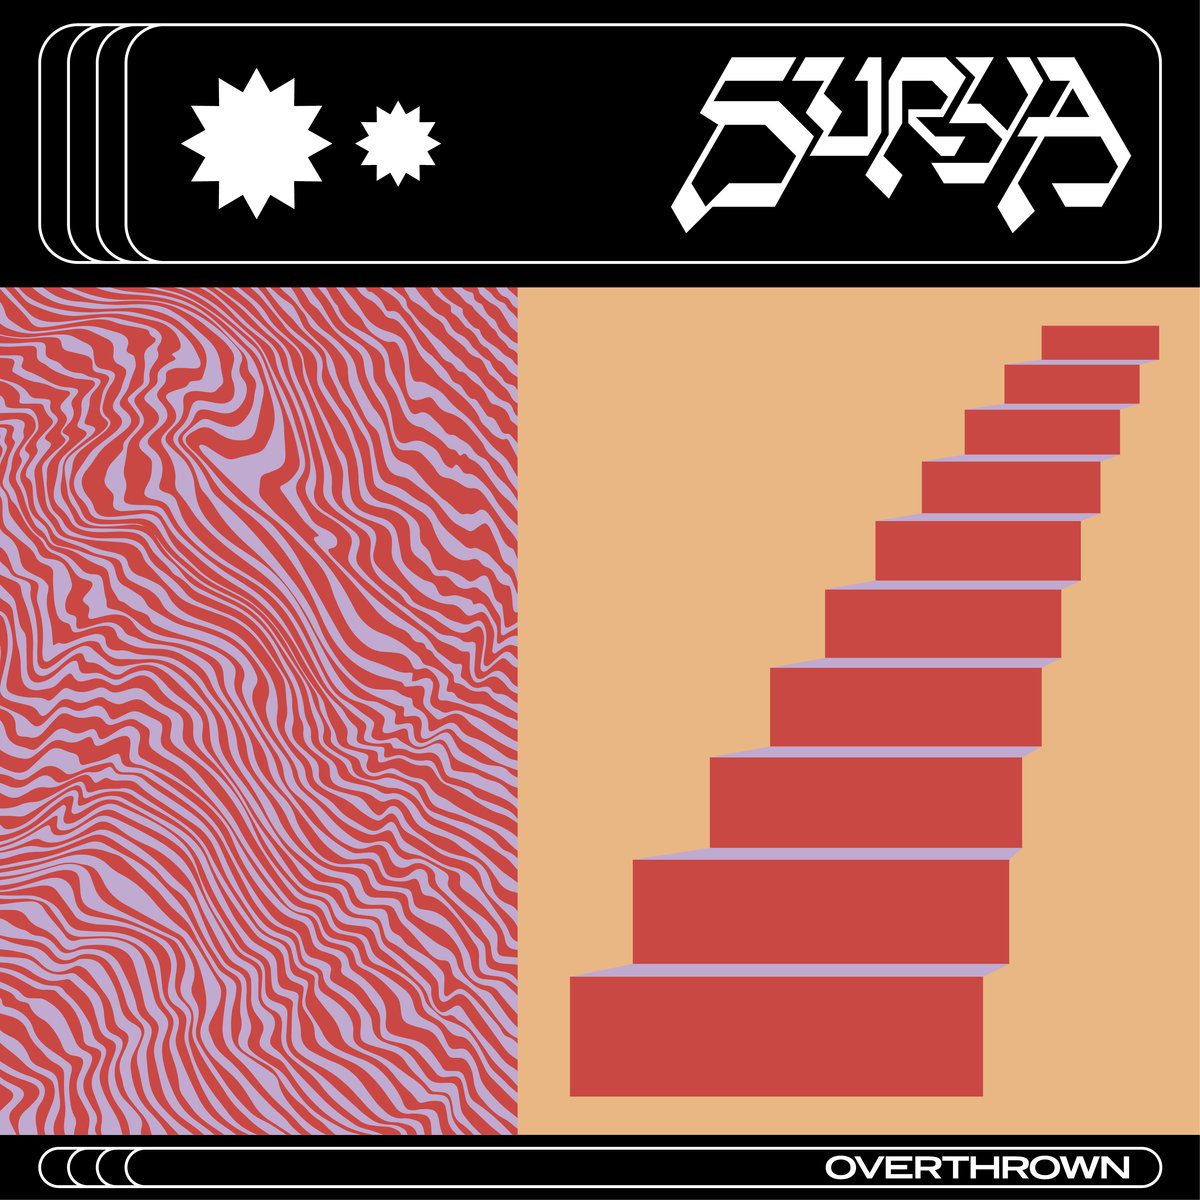 SURYA – Overthrown